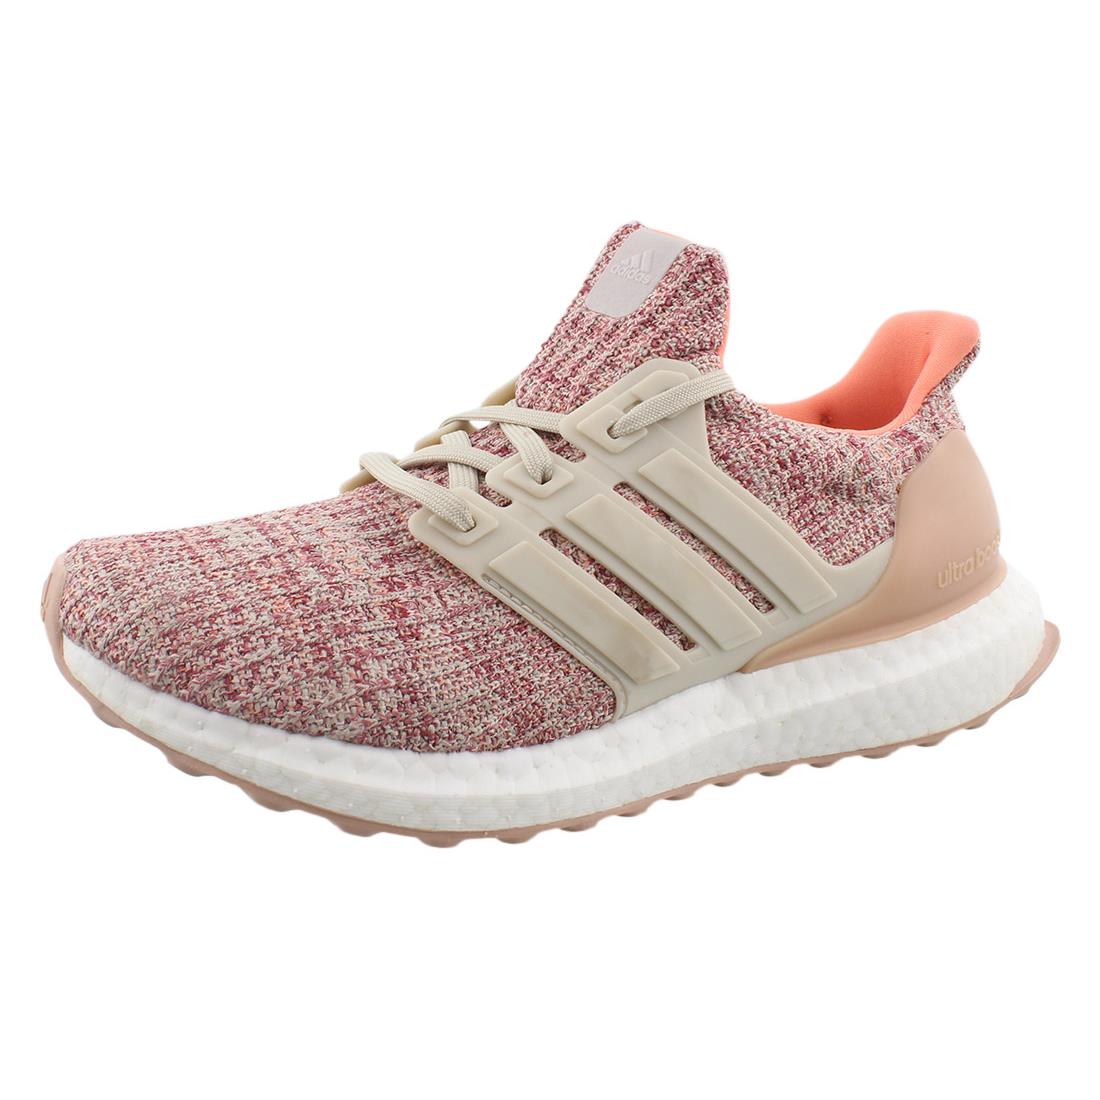 Adidas Ultraboost Girls Shoes - Pink/White, Main: Pink